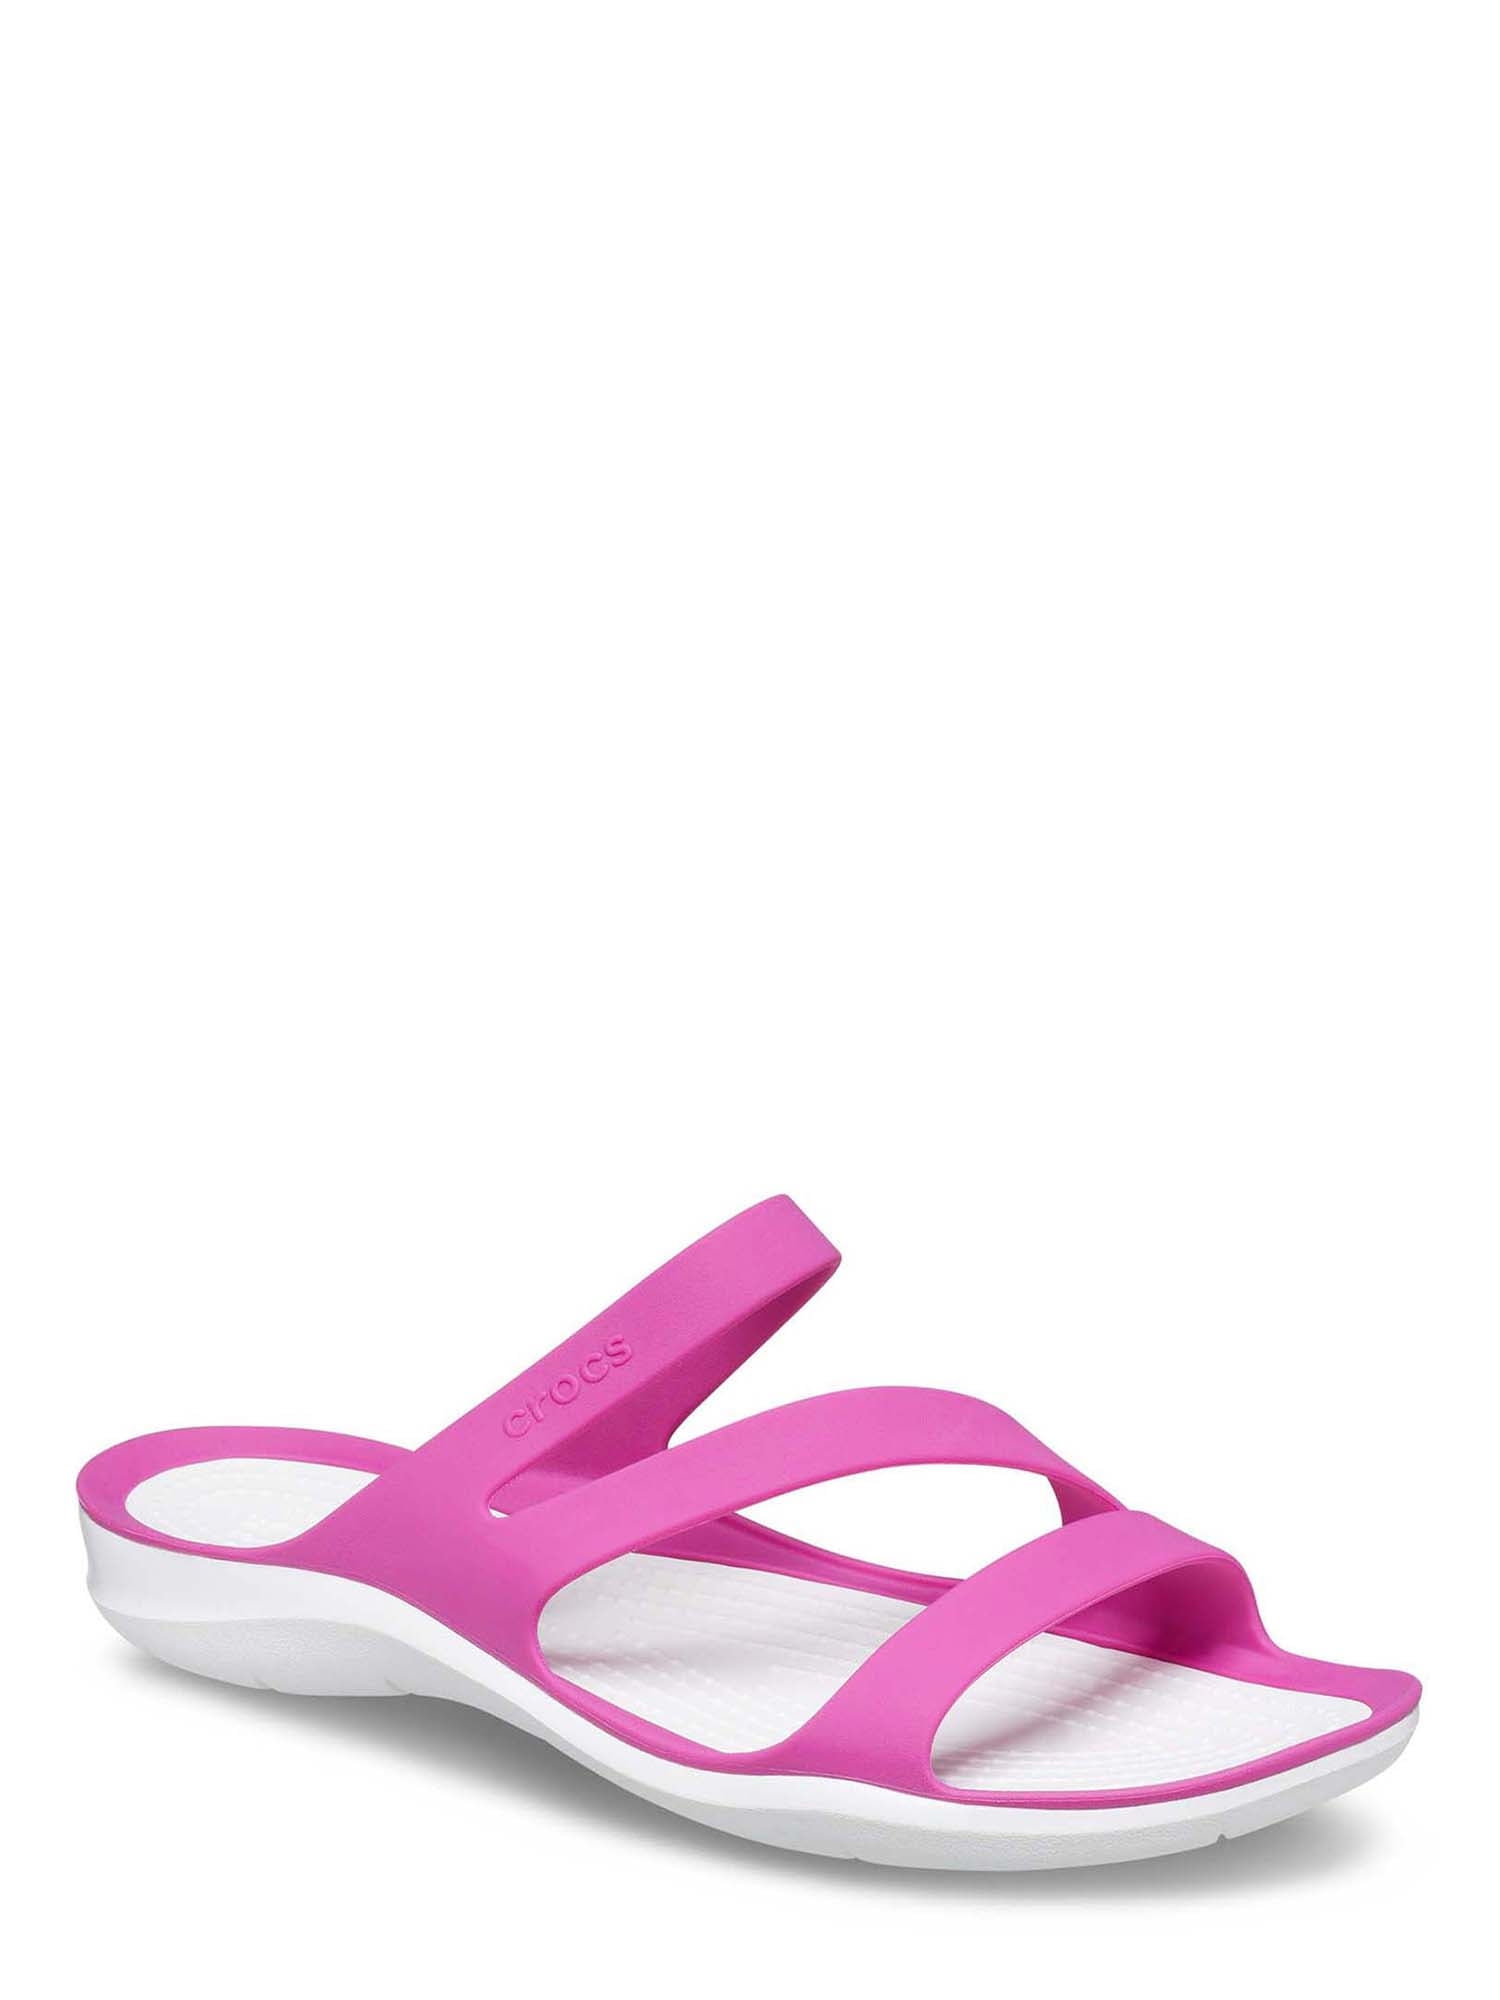 Womens Pale Pink Crocs Classic Clog Sandals | schuh